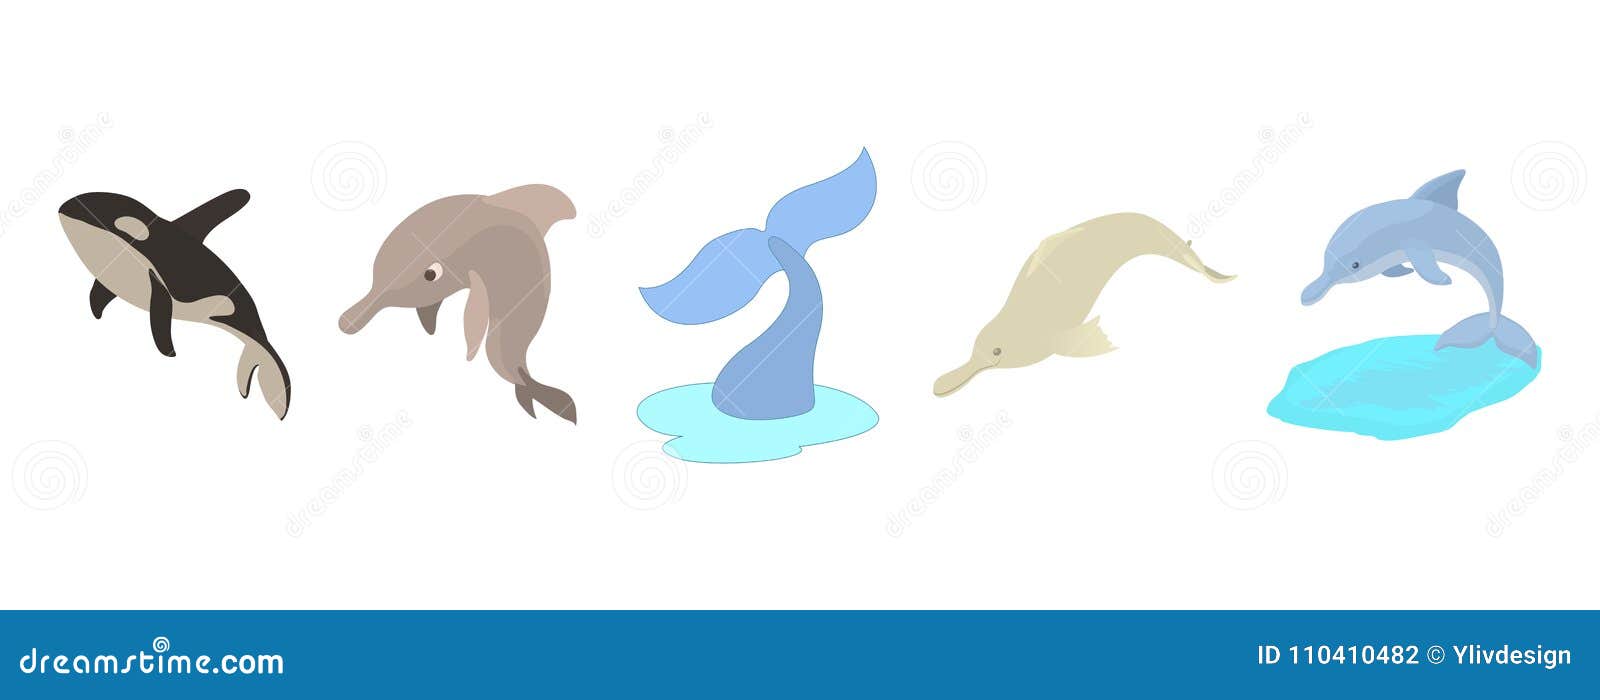 sea mammals icon set, cartoon style